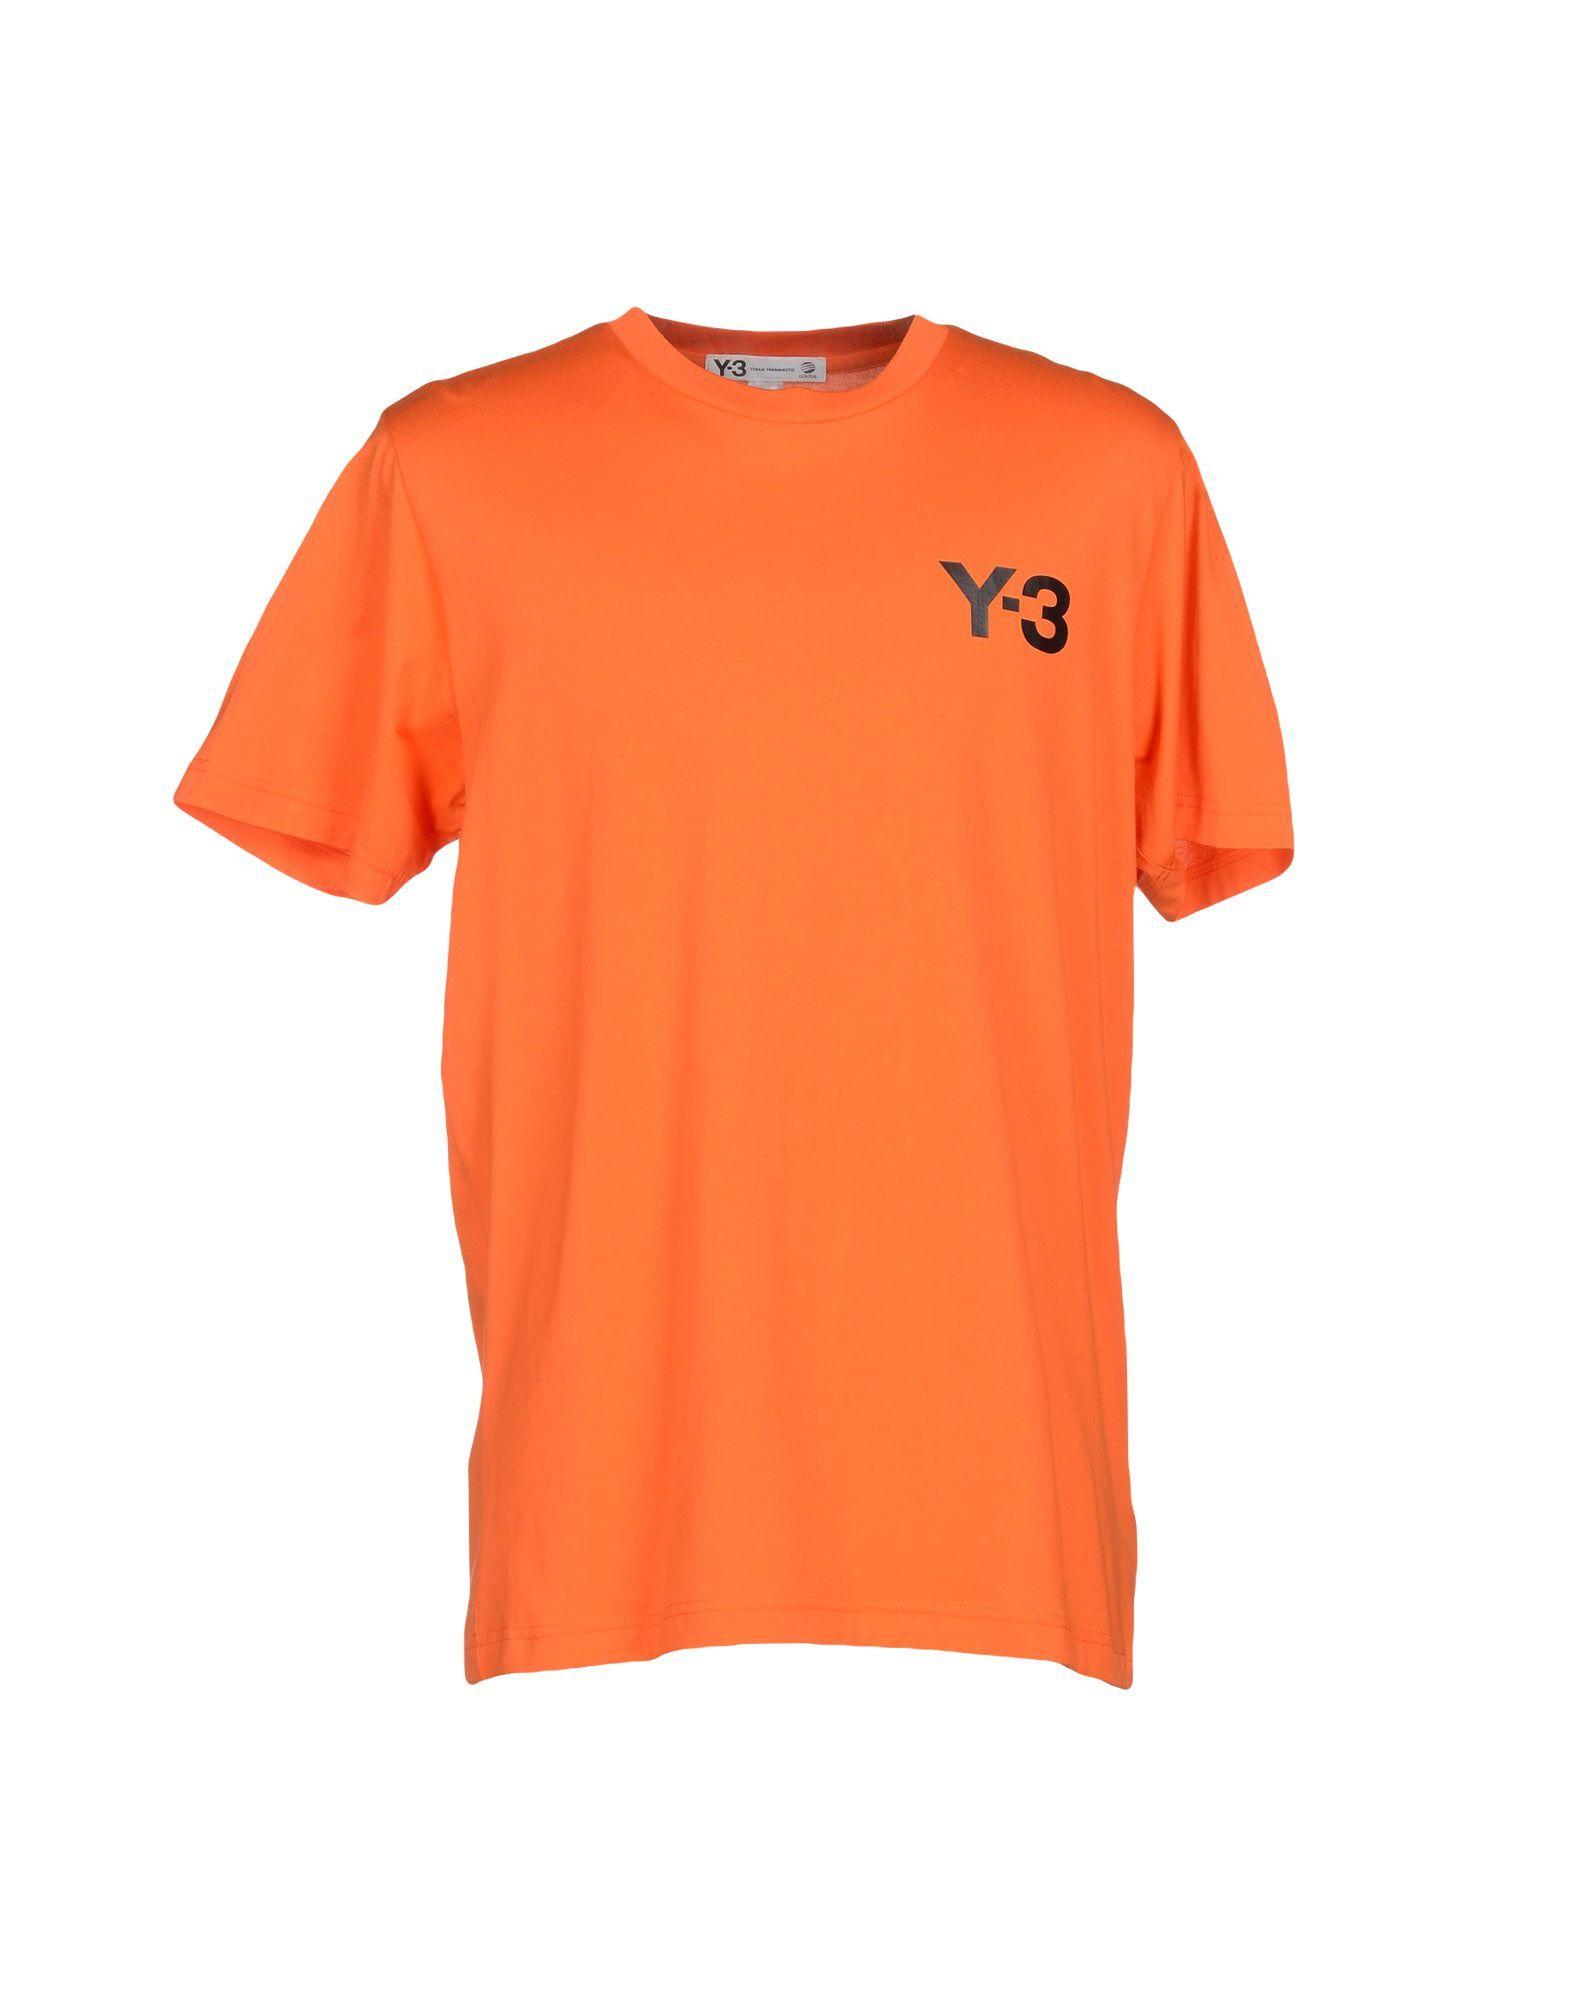 Red and Orange Y Logo - Y-3 T-shirt in Orange for Men - Lyst